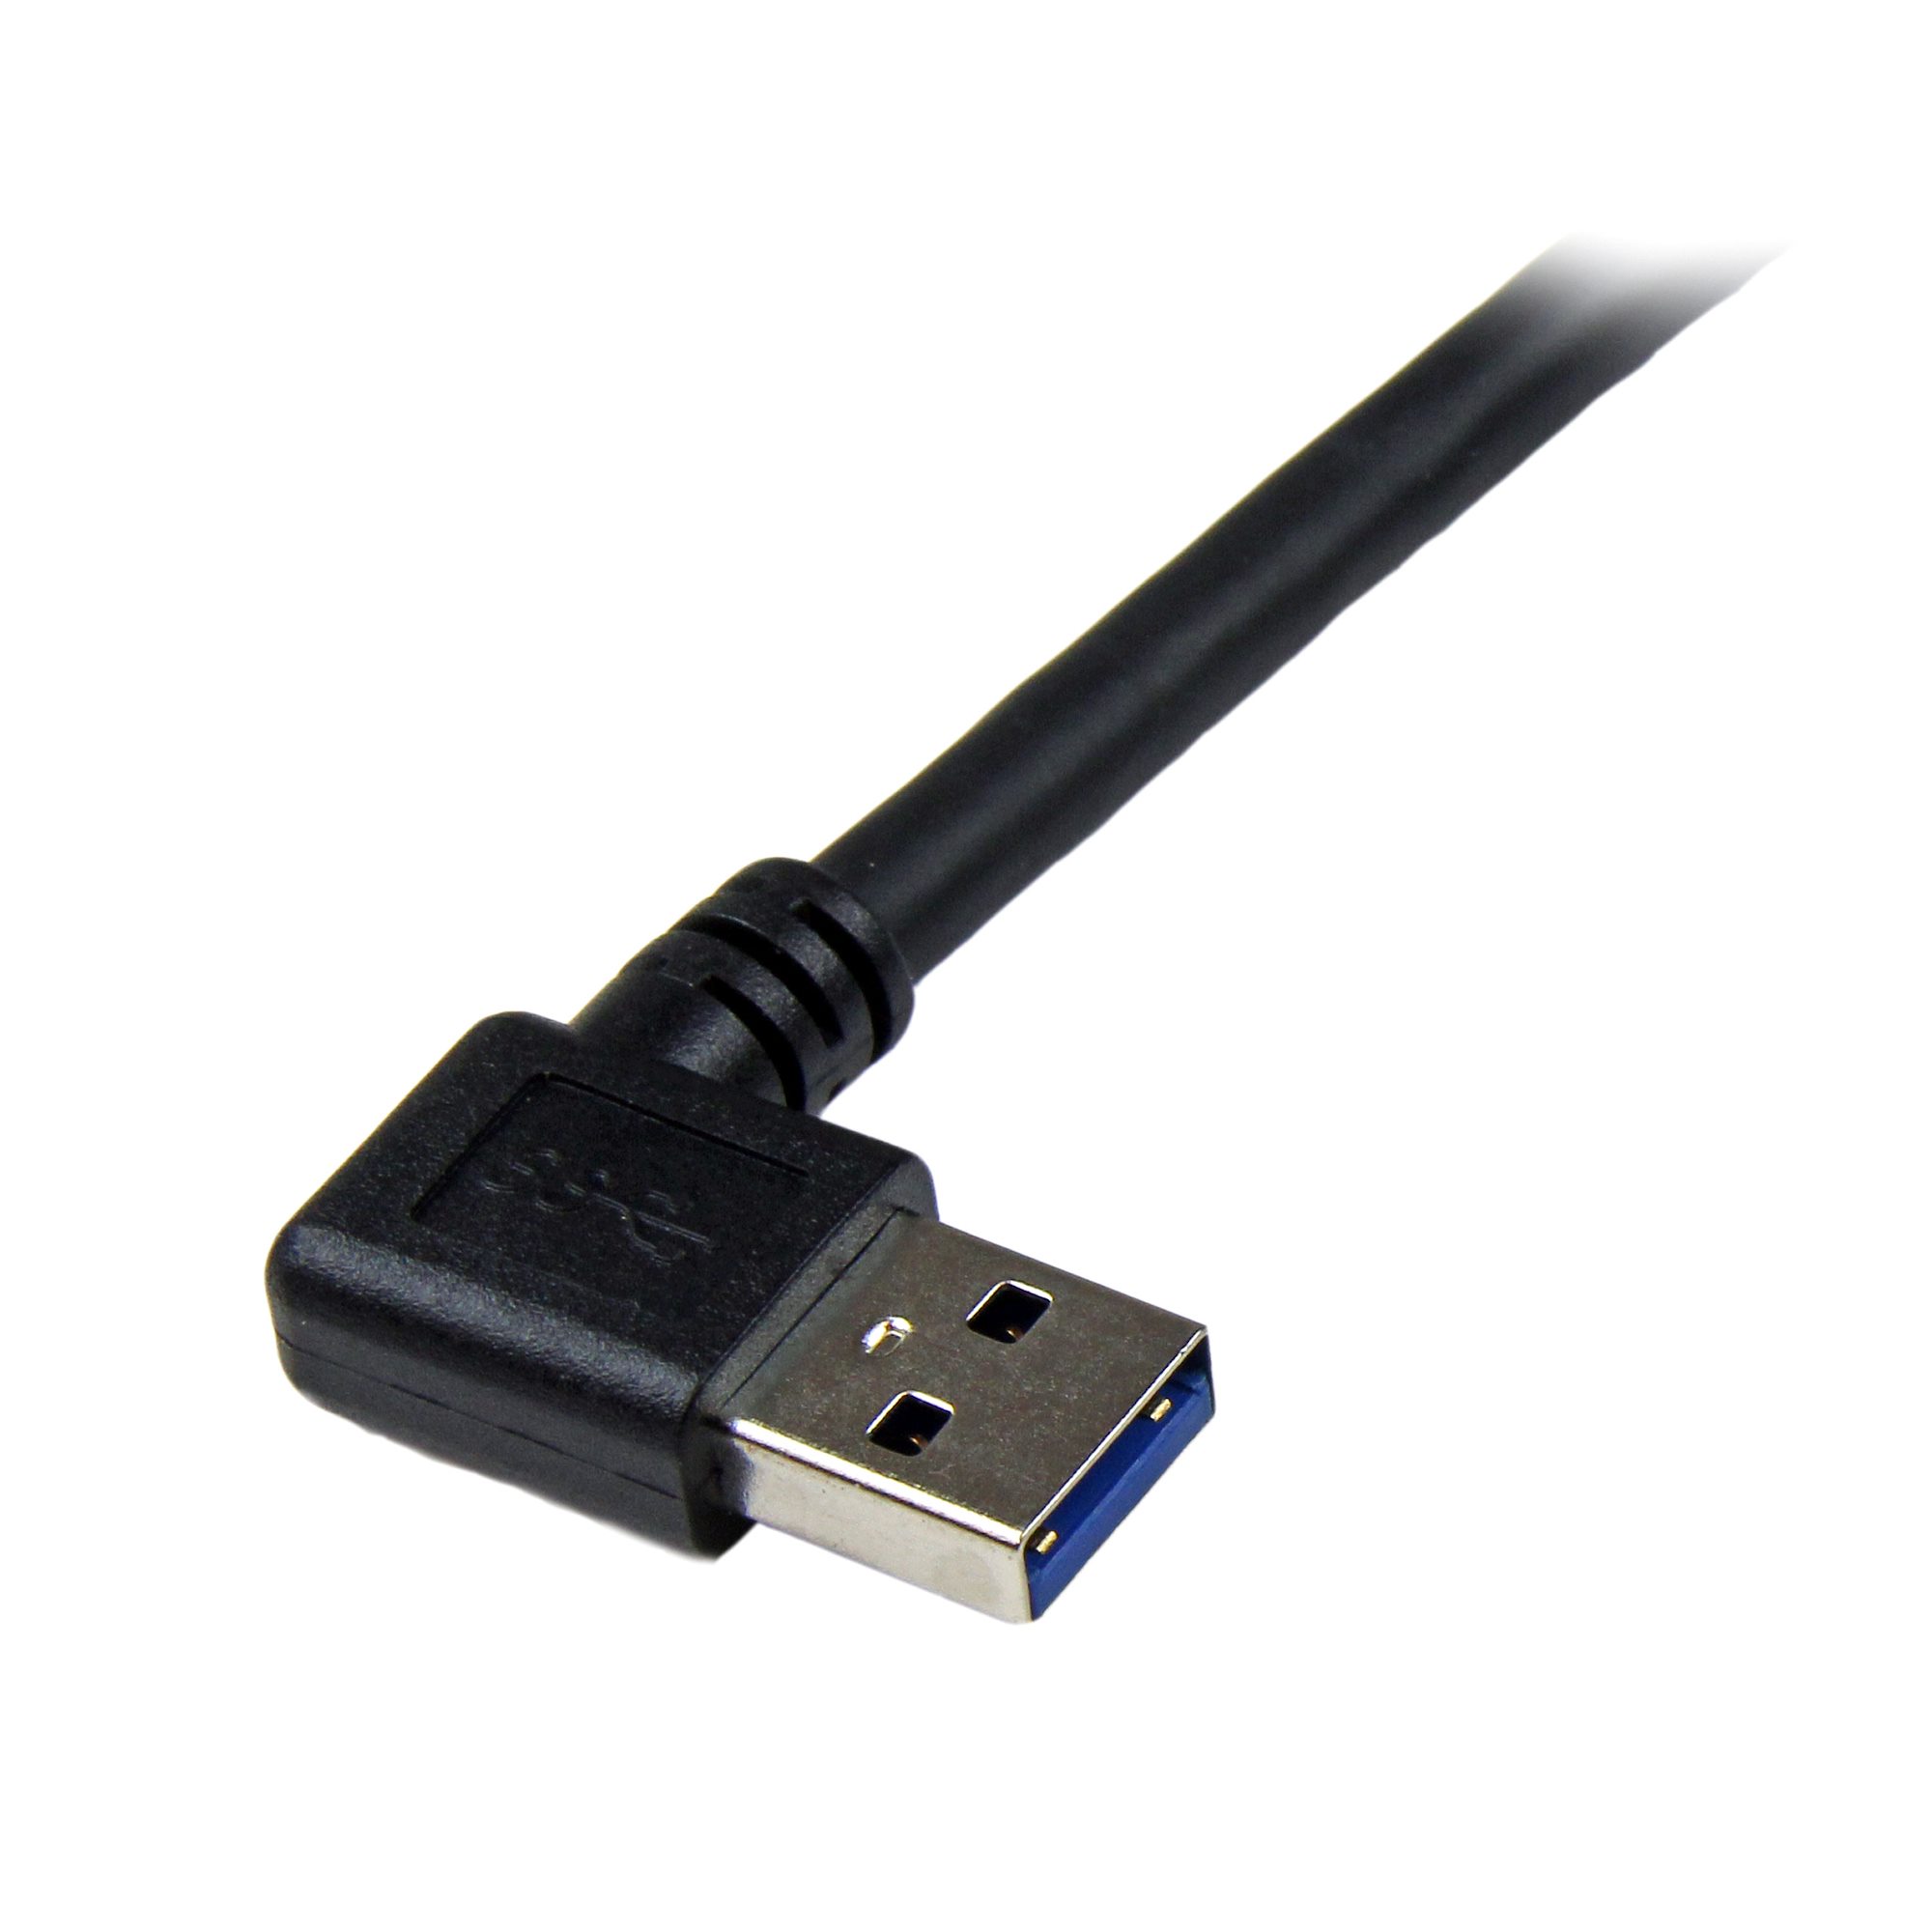 Кабель USB 3.0 A-B загнутый. Кабель USB 3.0 Mini USB 3.0. Cable USB 3.0 10m. USB 3.0 right Angle. Питание usb mini